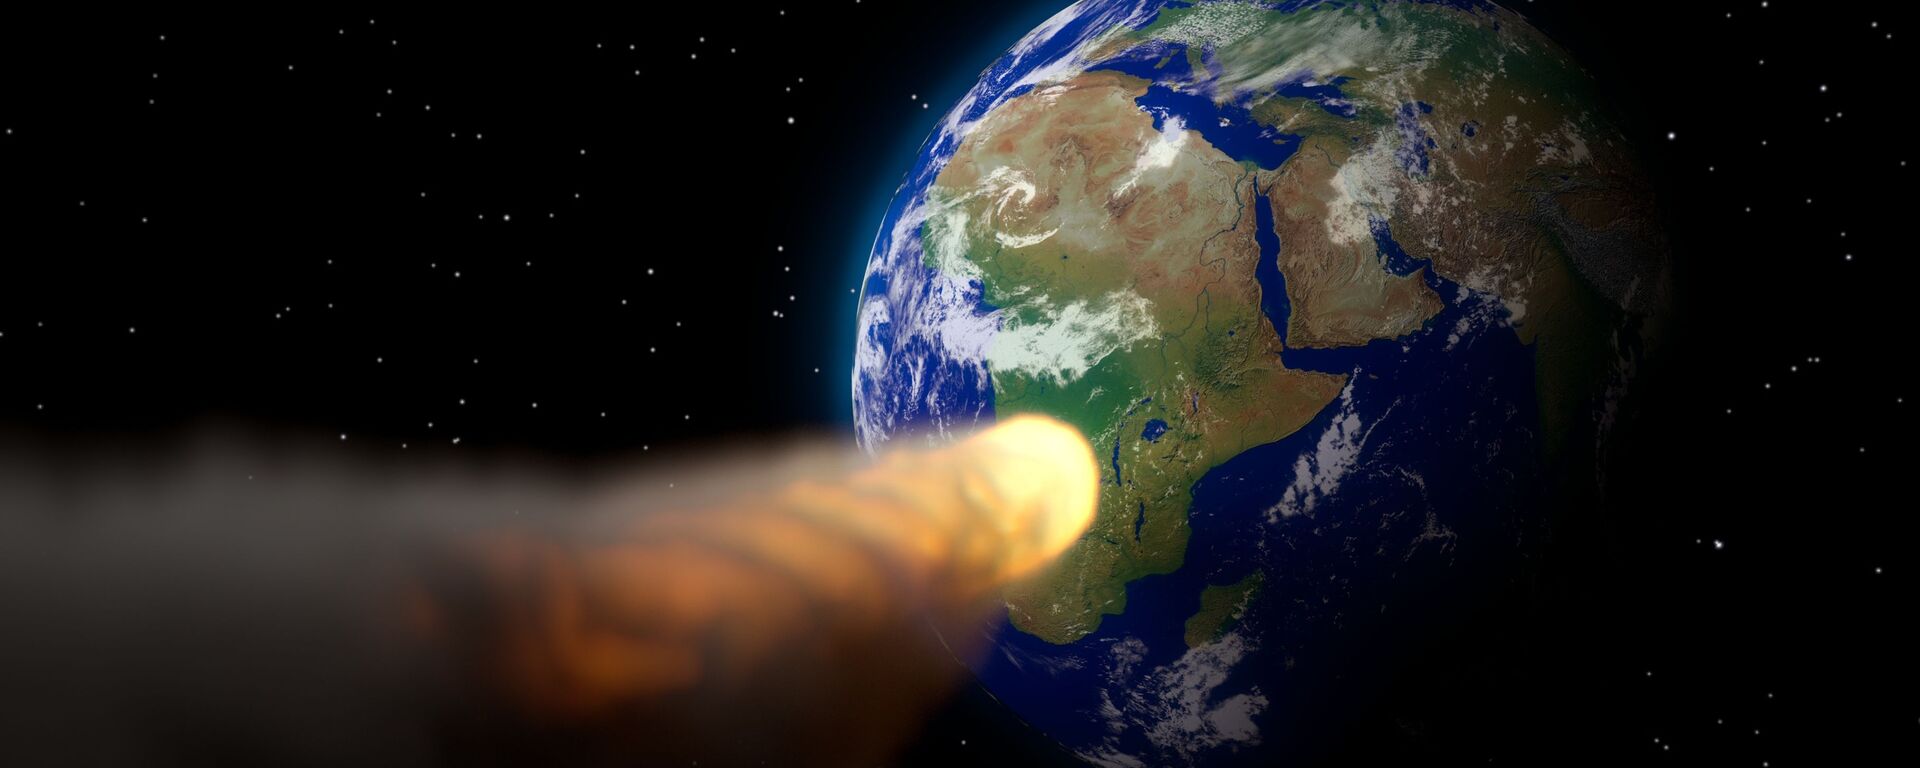 Ilustração artística de asteroide se aproximando da Terra - Sputnik Brasil, 1920, 17.01.2022